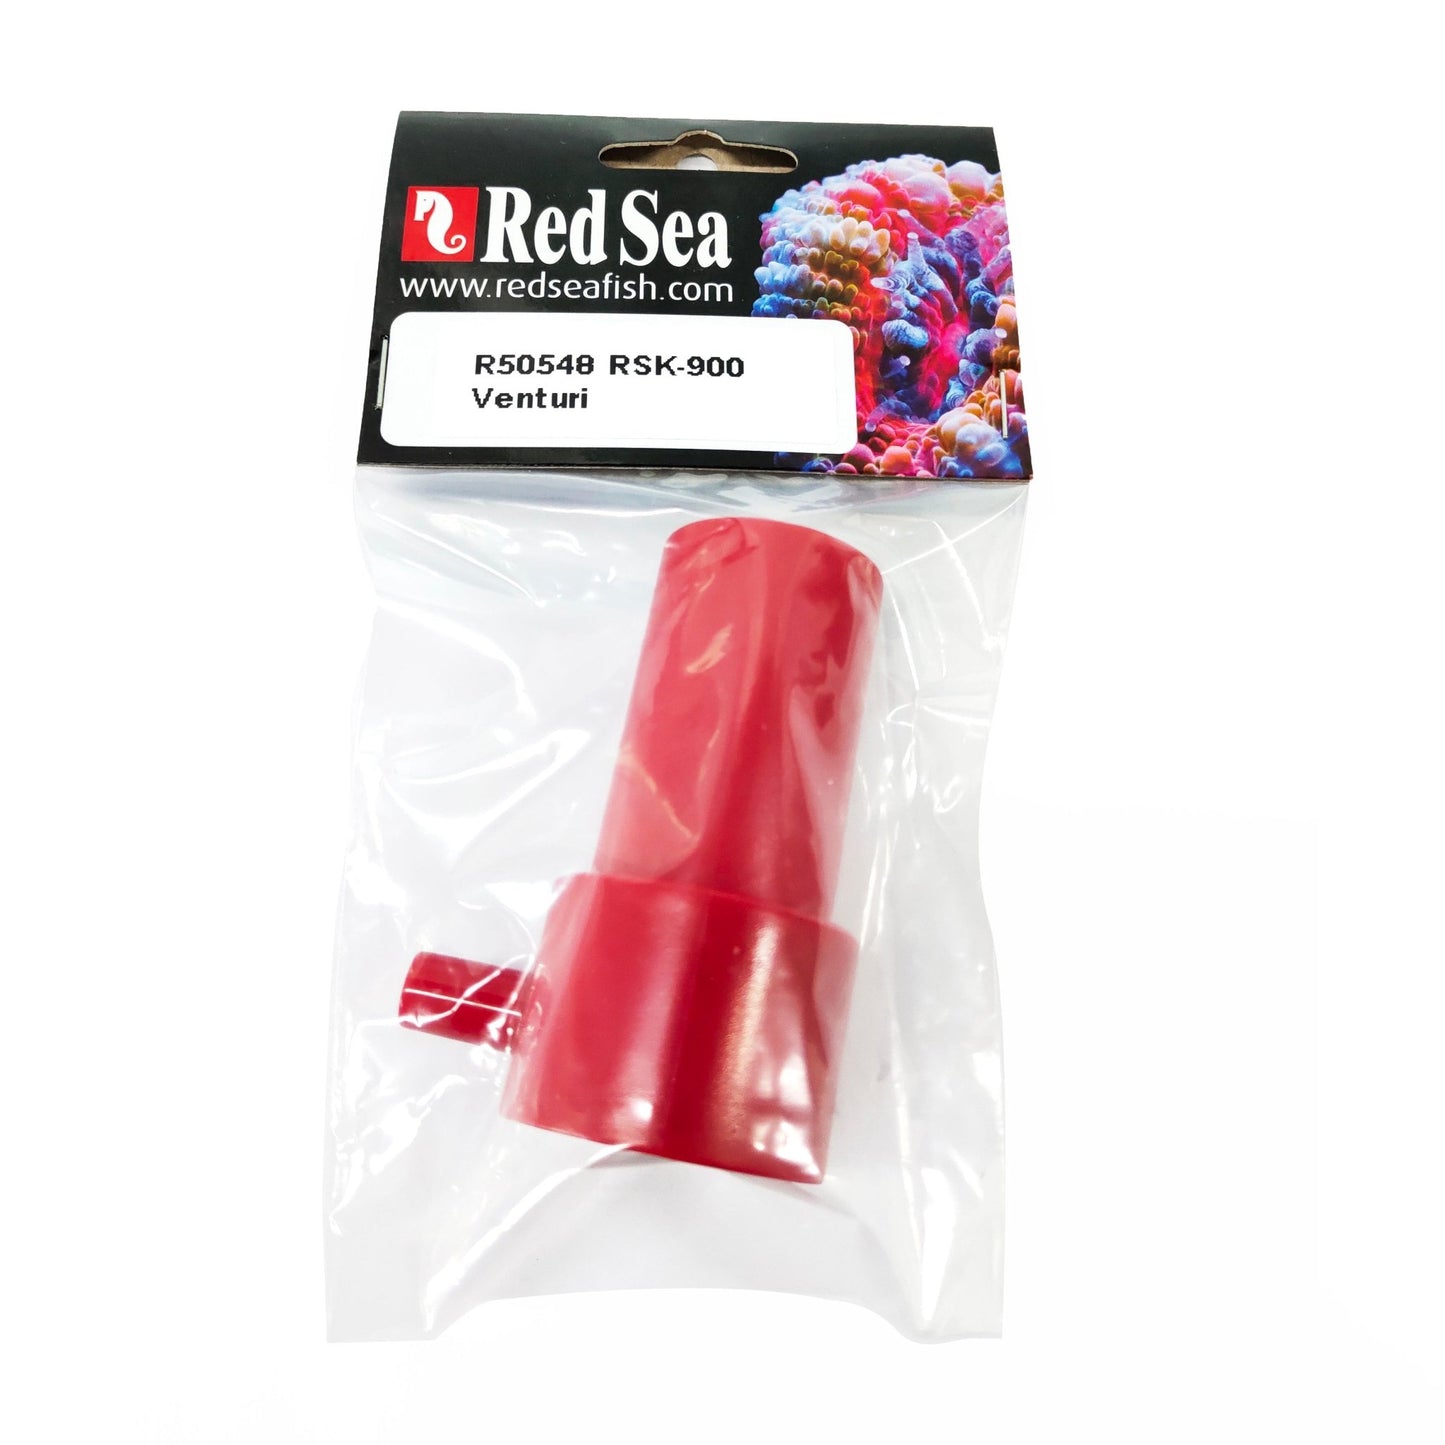 Red Sea RSK-900 Venturi (R50548) - Charterhouse Aquatics